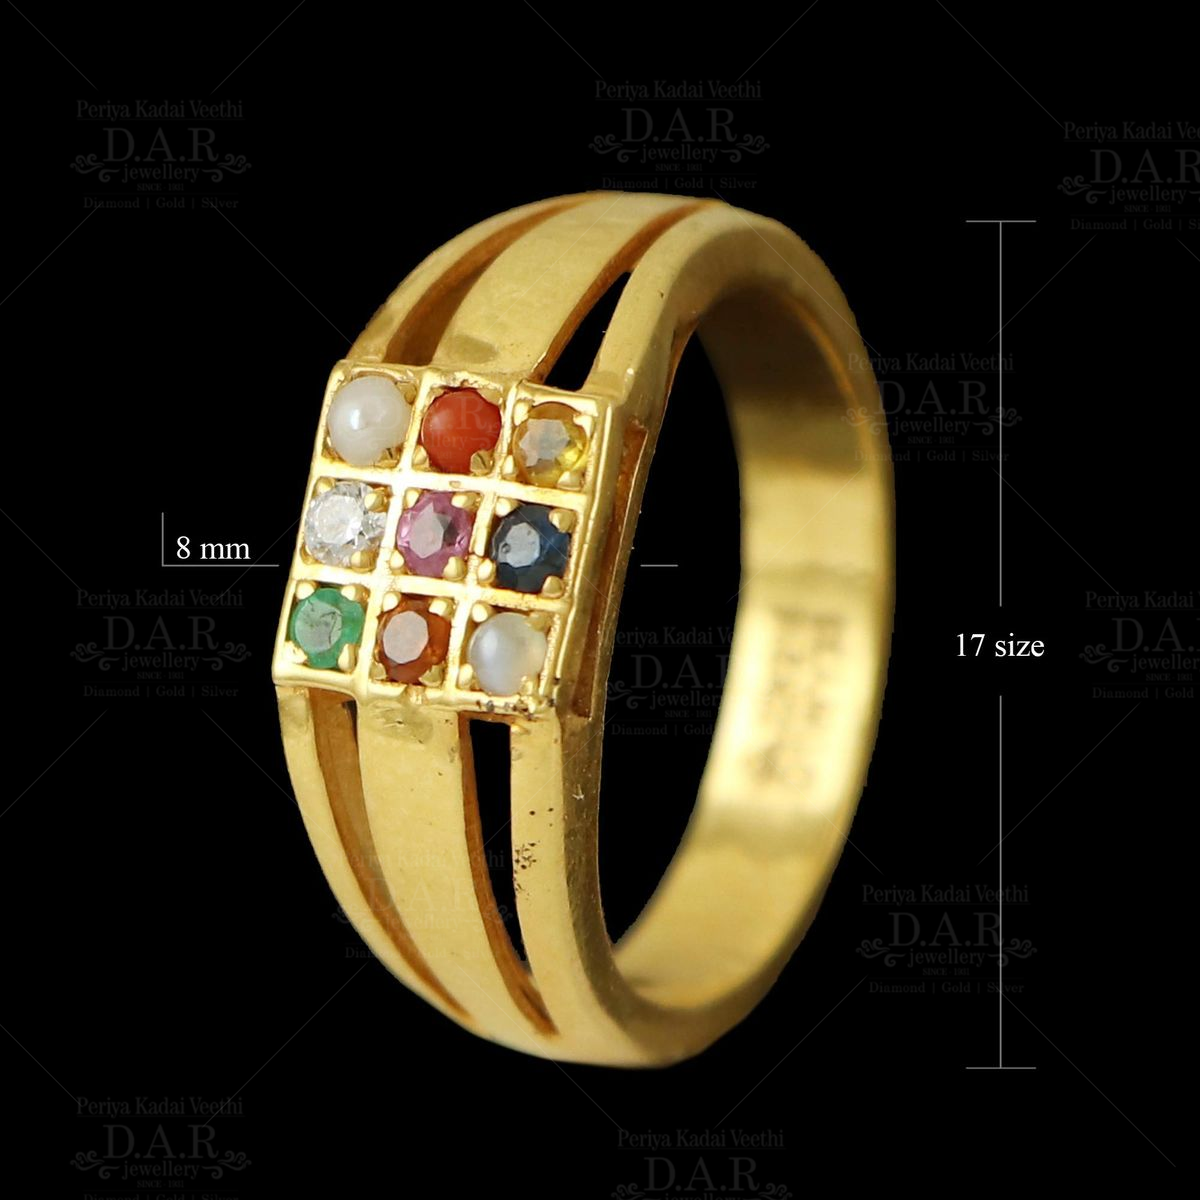 Buy 450+ Designs Online | BlueStone.com - India's #1 Online Jewellery Brand